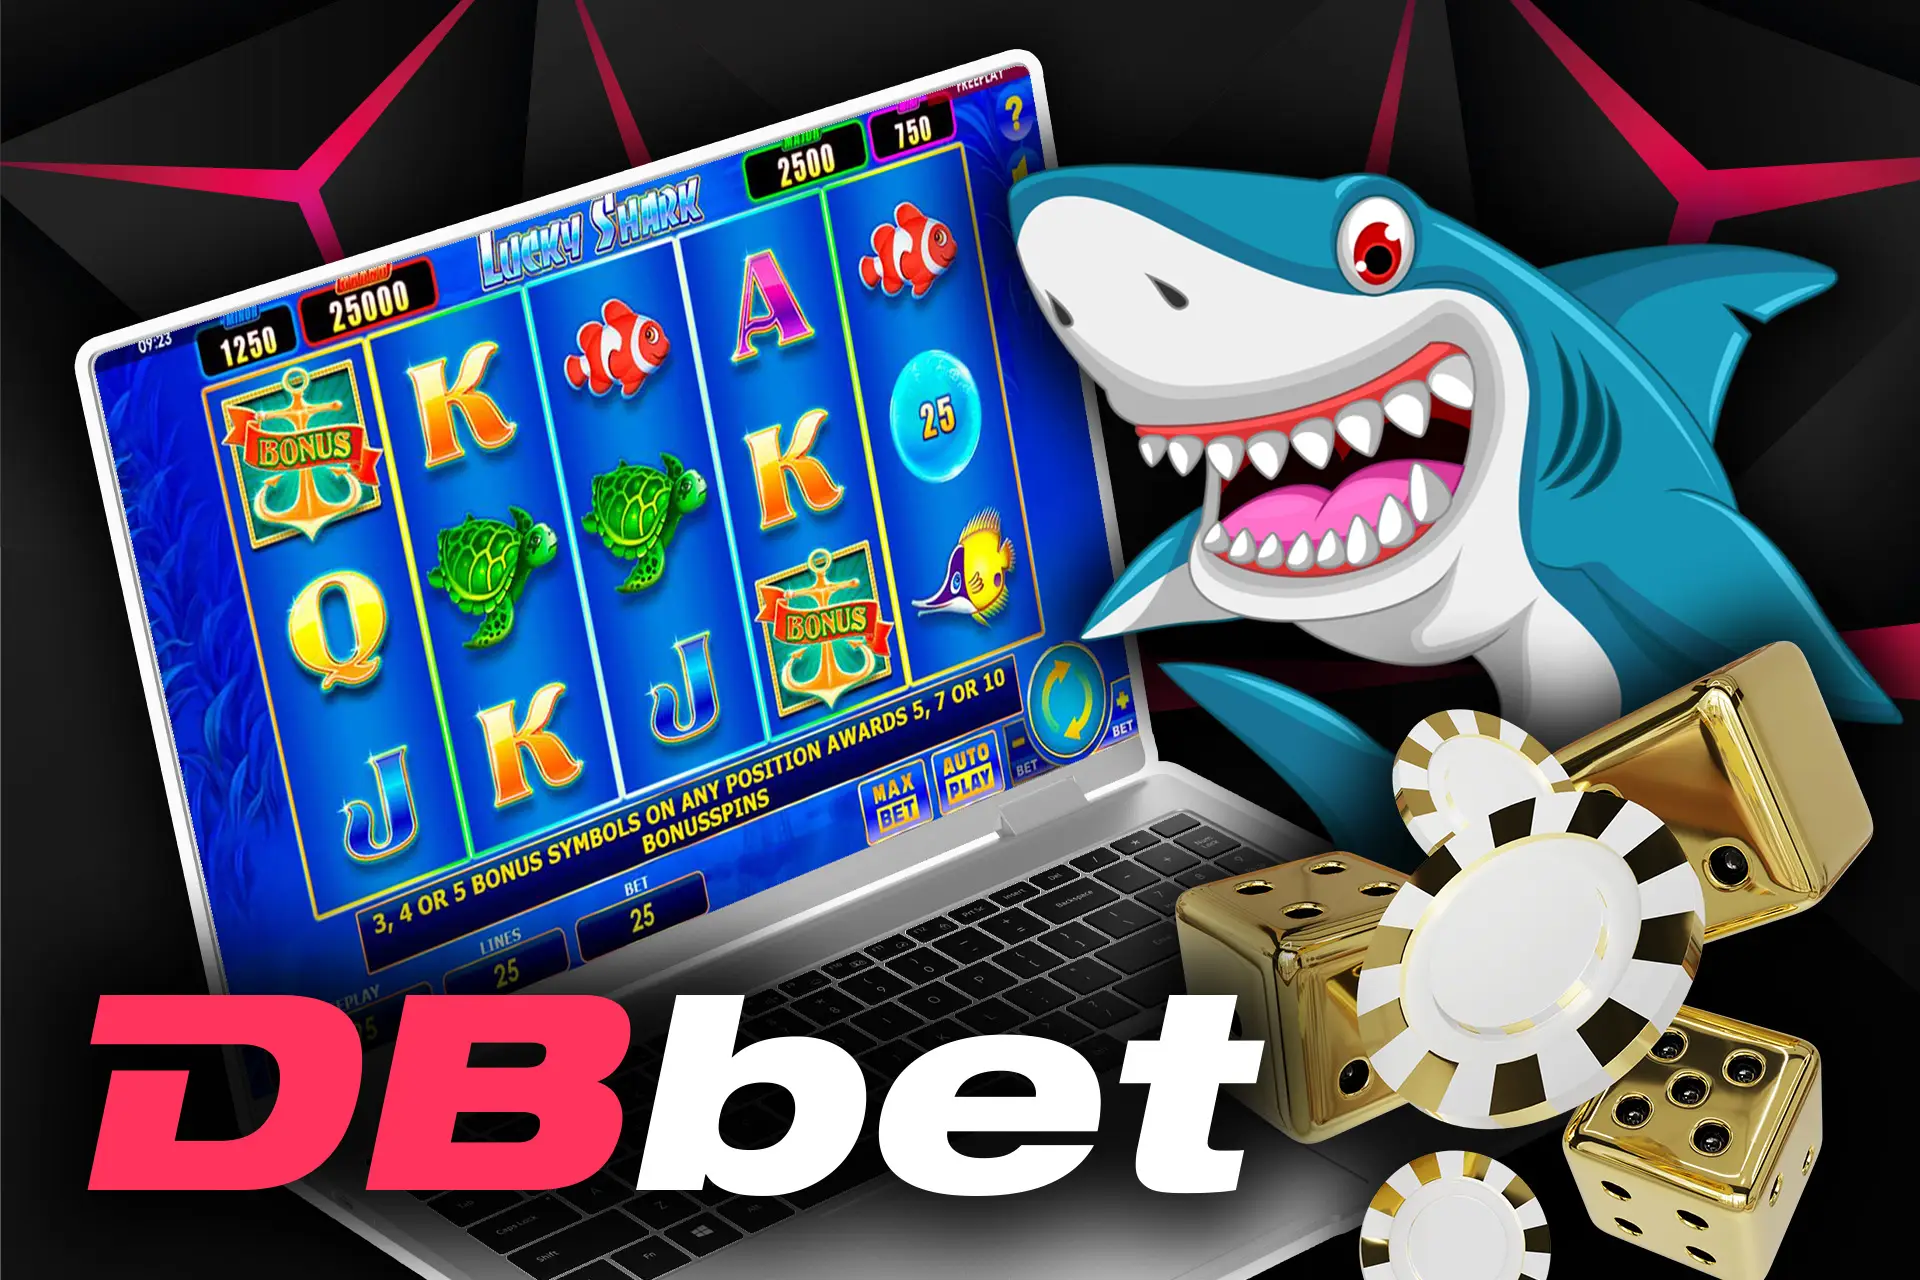 Try Lucky Shark on DBbet.